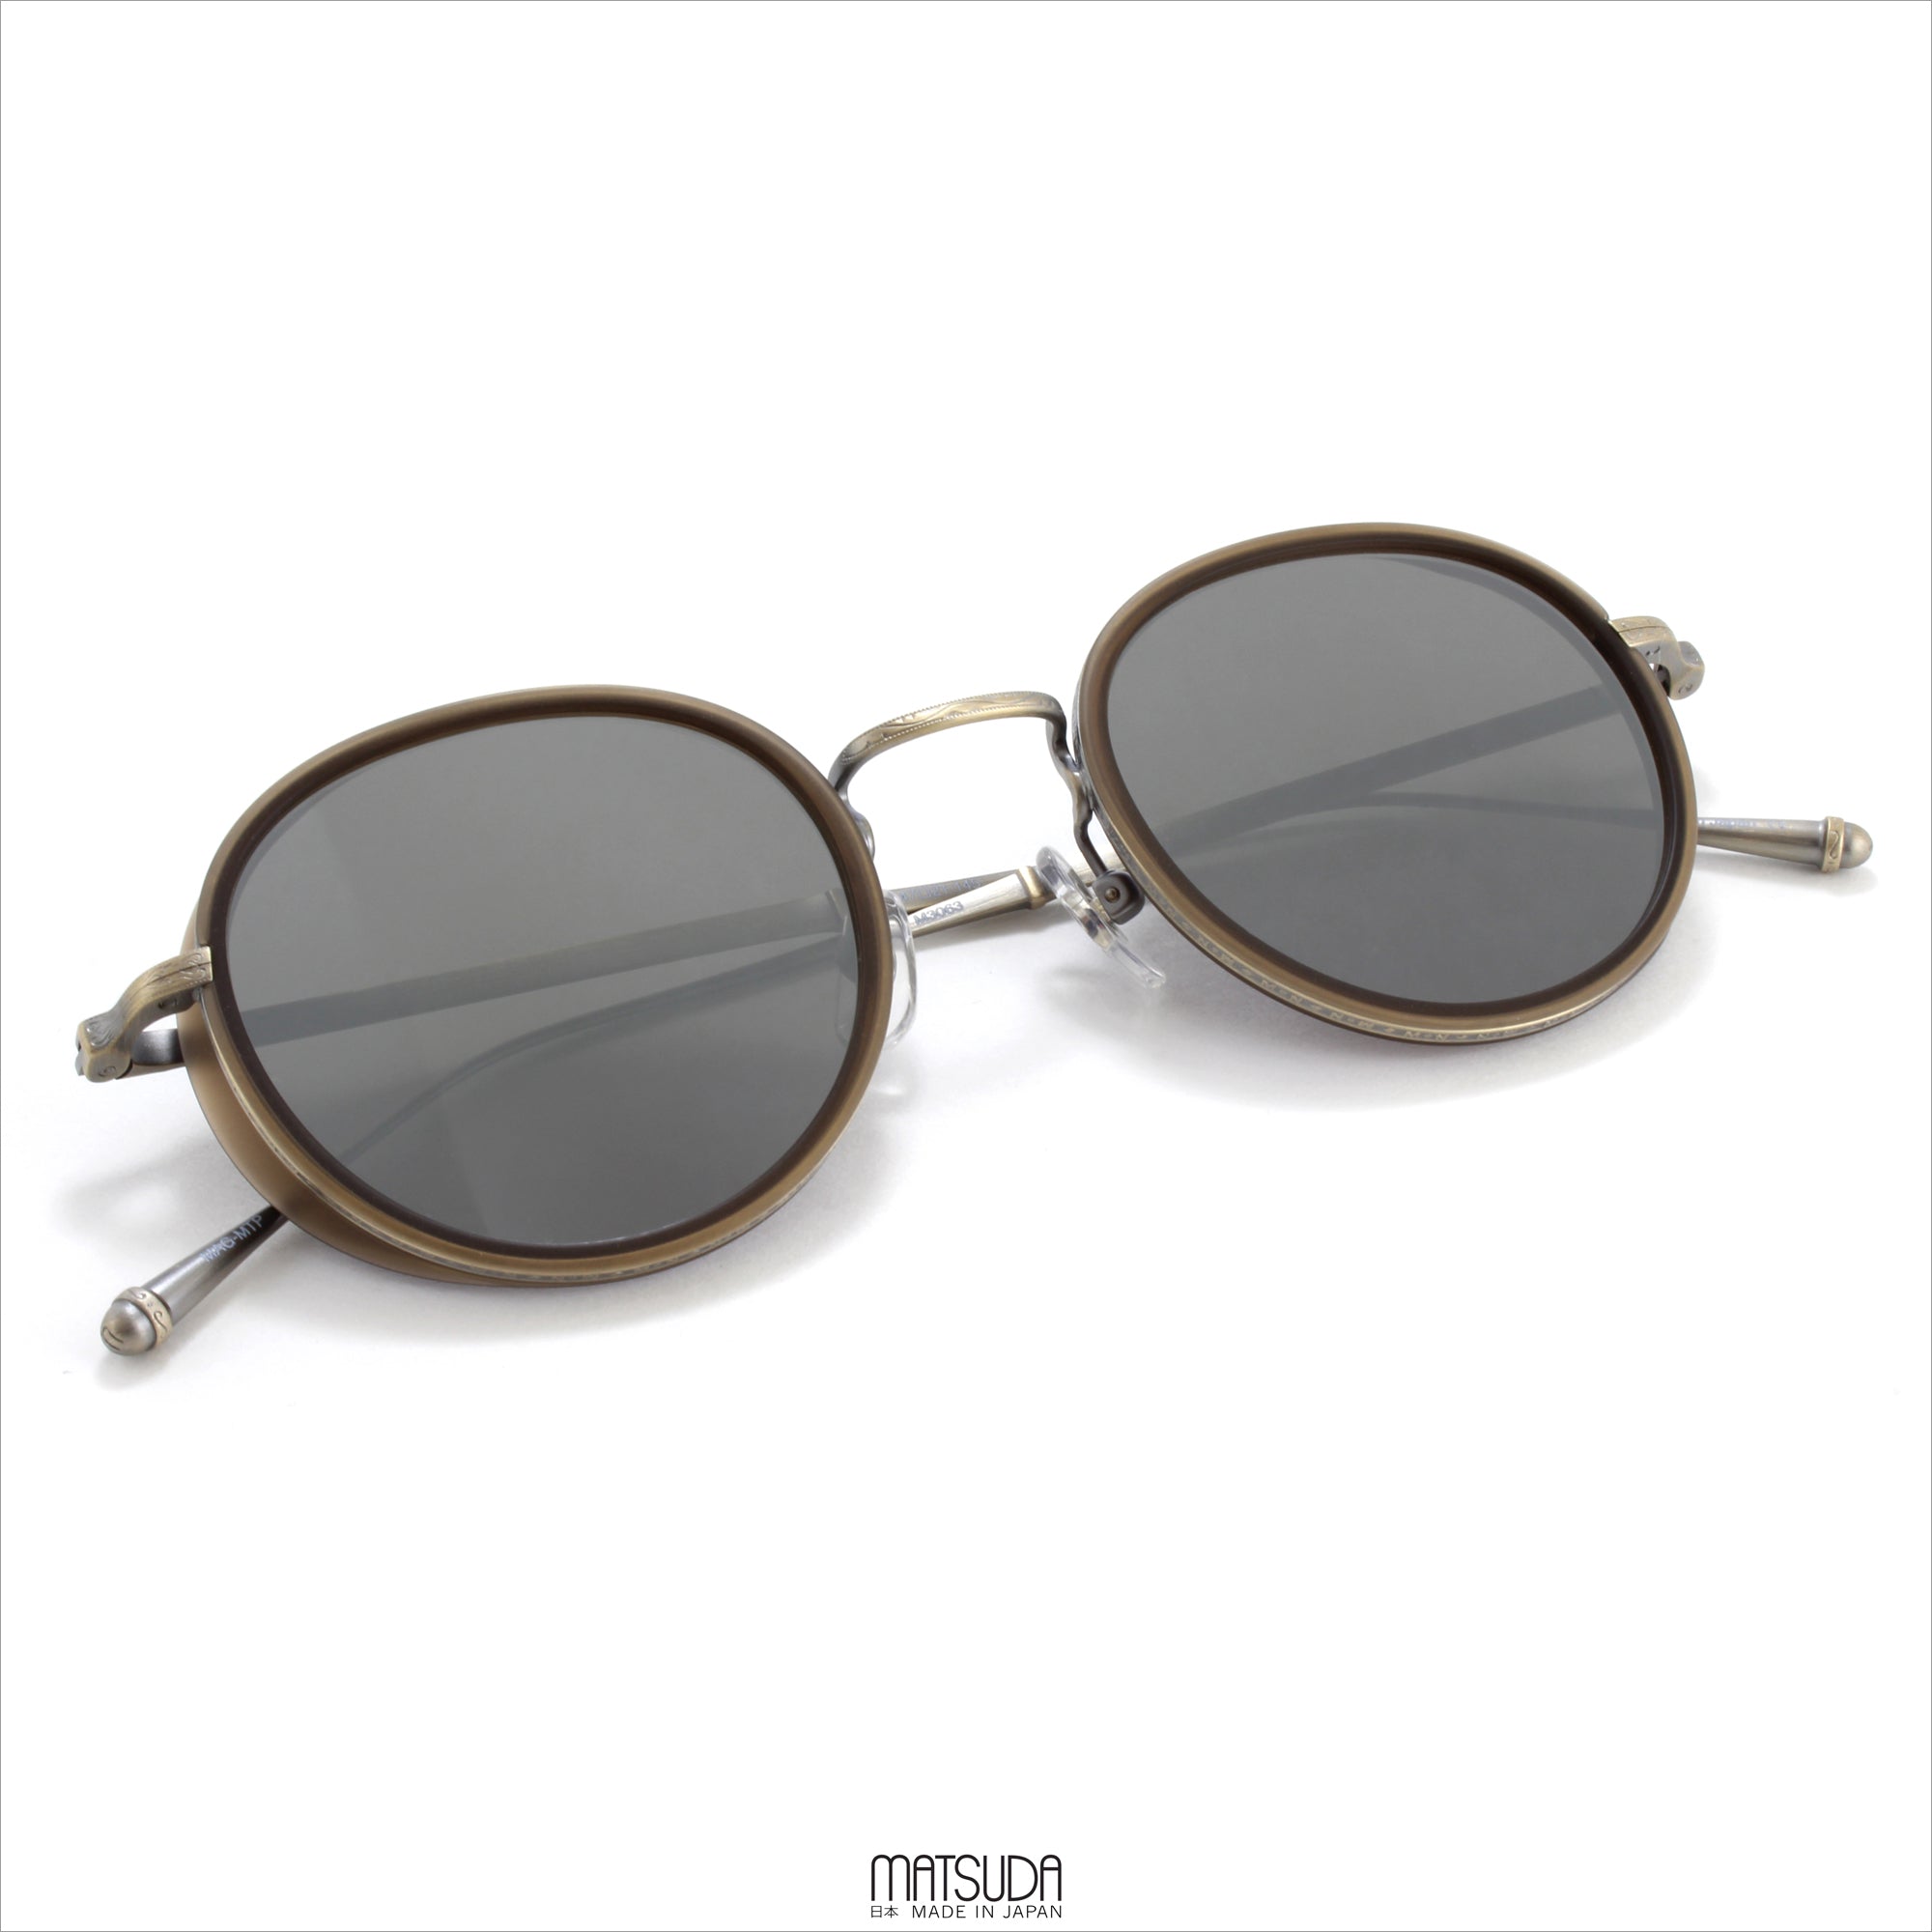 Matsuda Eyewear // M3063 Sunglasses